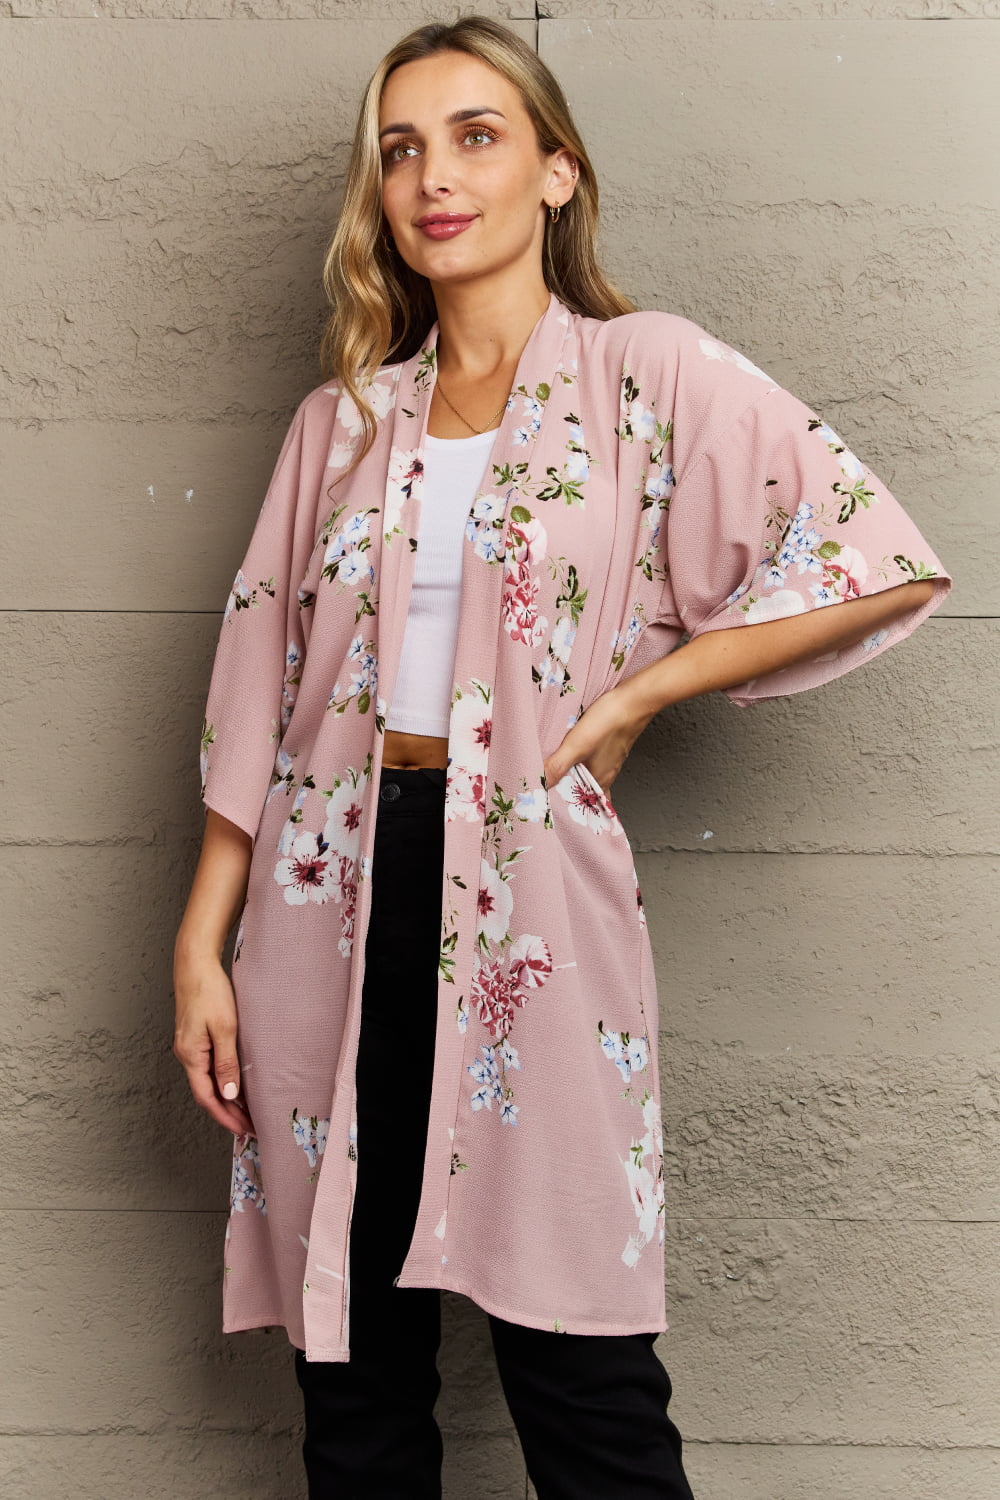 Justin Taylor Aurora Rose Floral Kimono - AnnRose Boutique